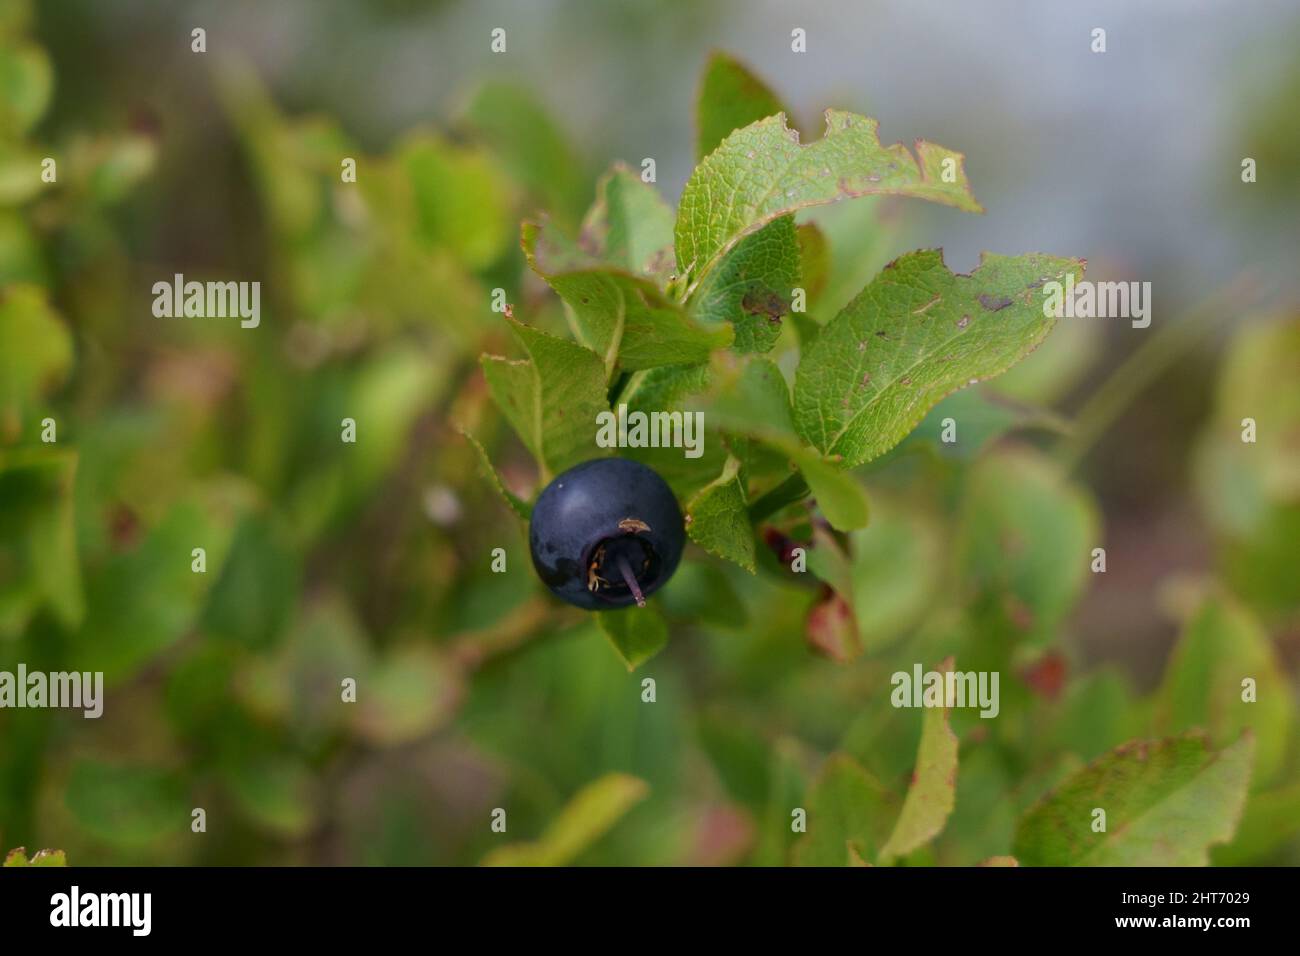 Blueberry Stock Photo